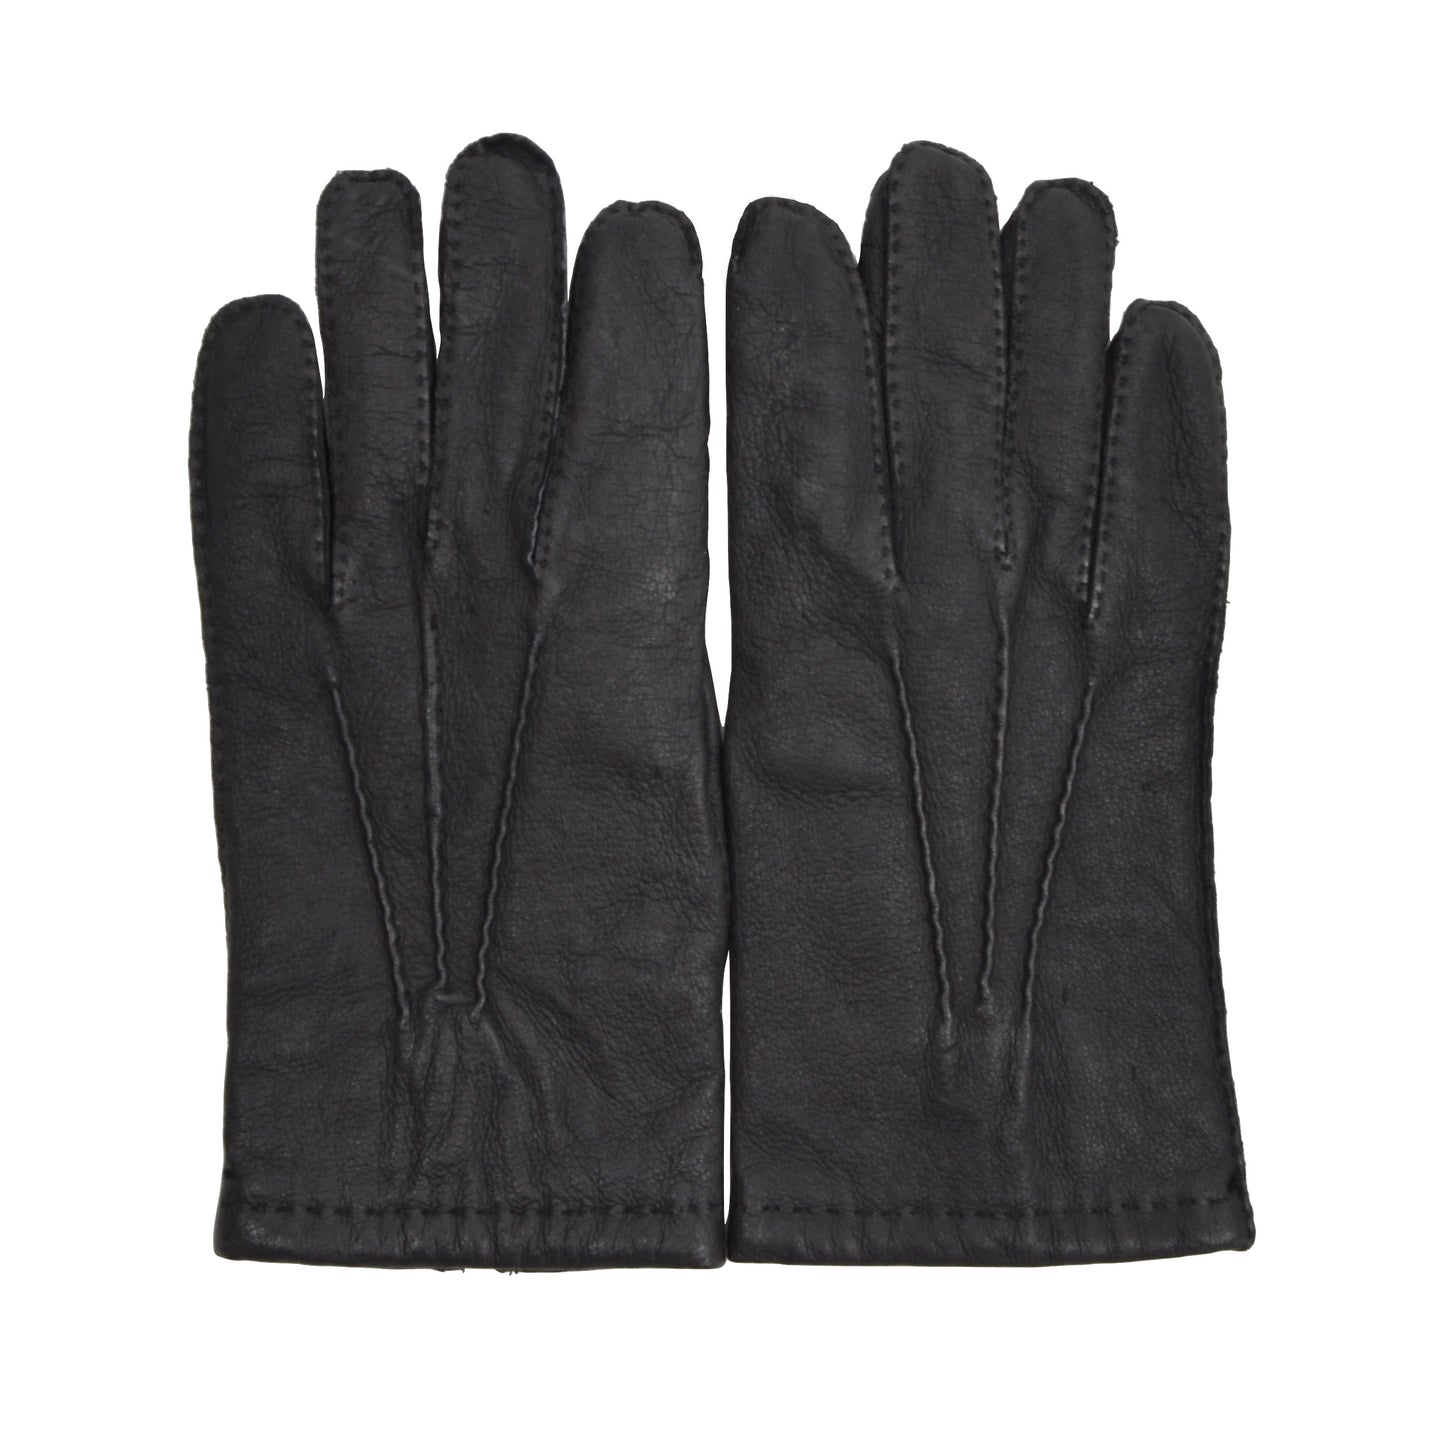 Ledergefütterte Handschuhe Größe 8,5 - Dunkelgrau/Schwarz